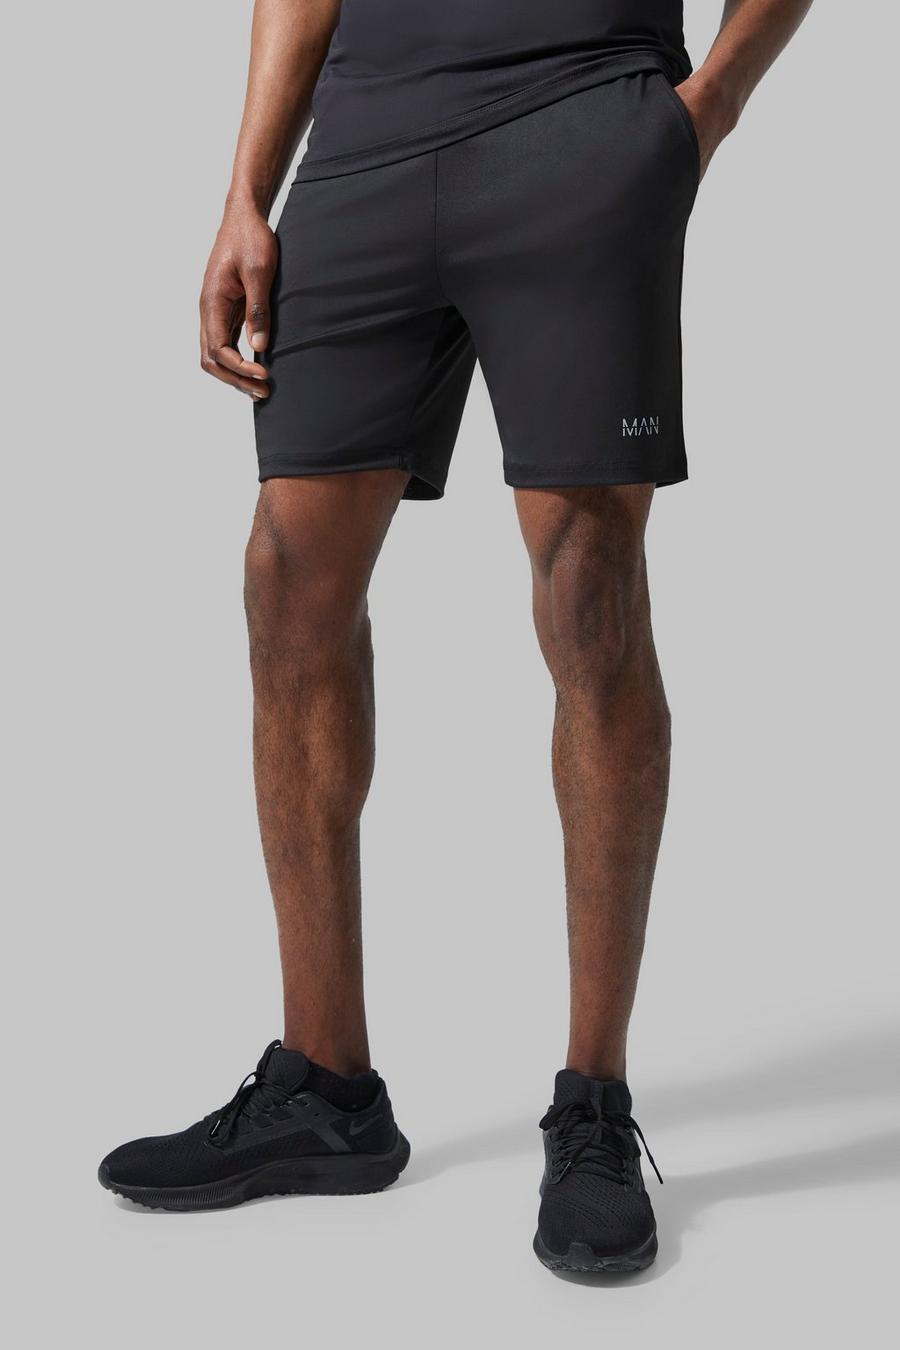 Pantaloncini Man Active Gym per alta performance, Black negro image number 1